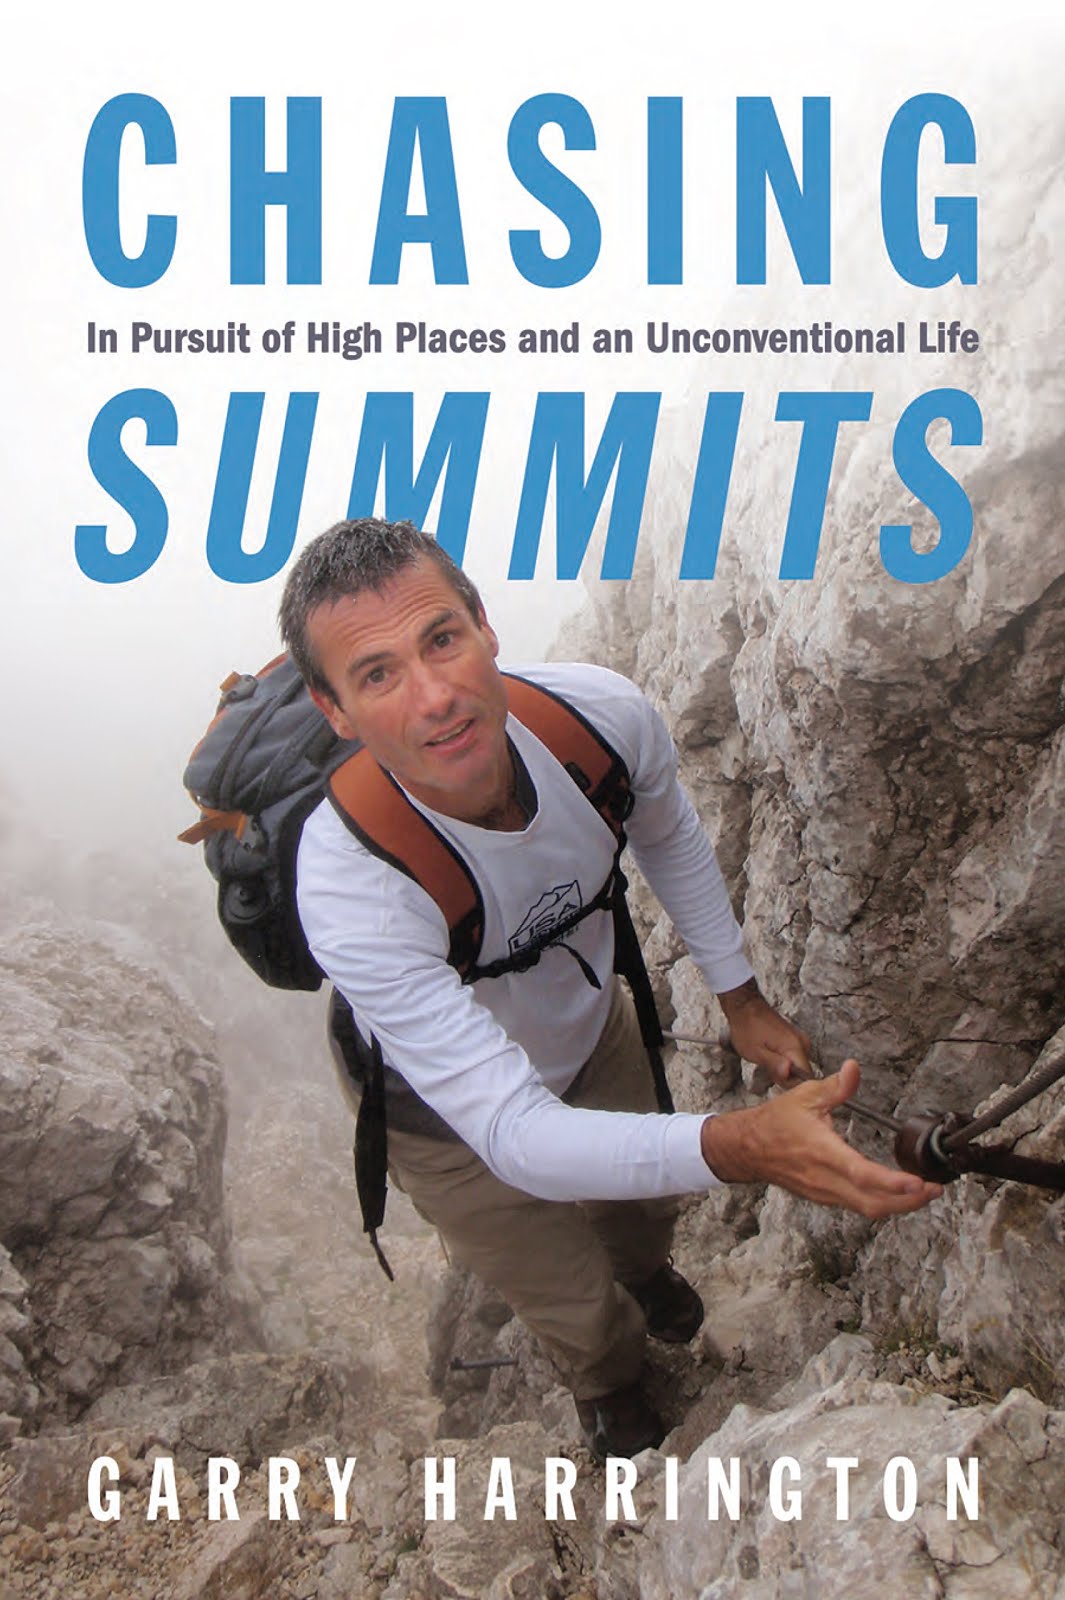 Chasing Summits...by Garry Harrington